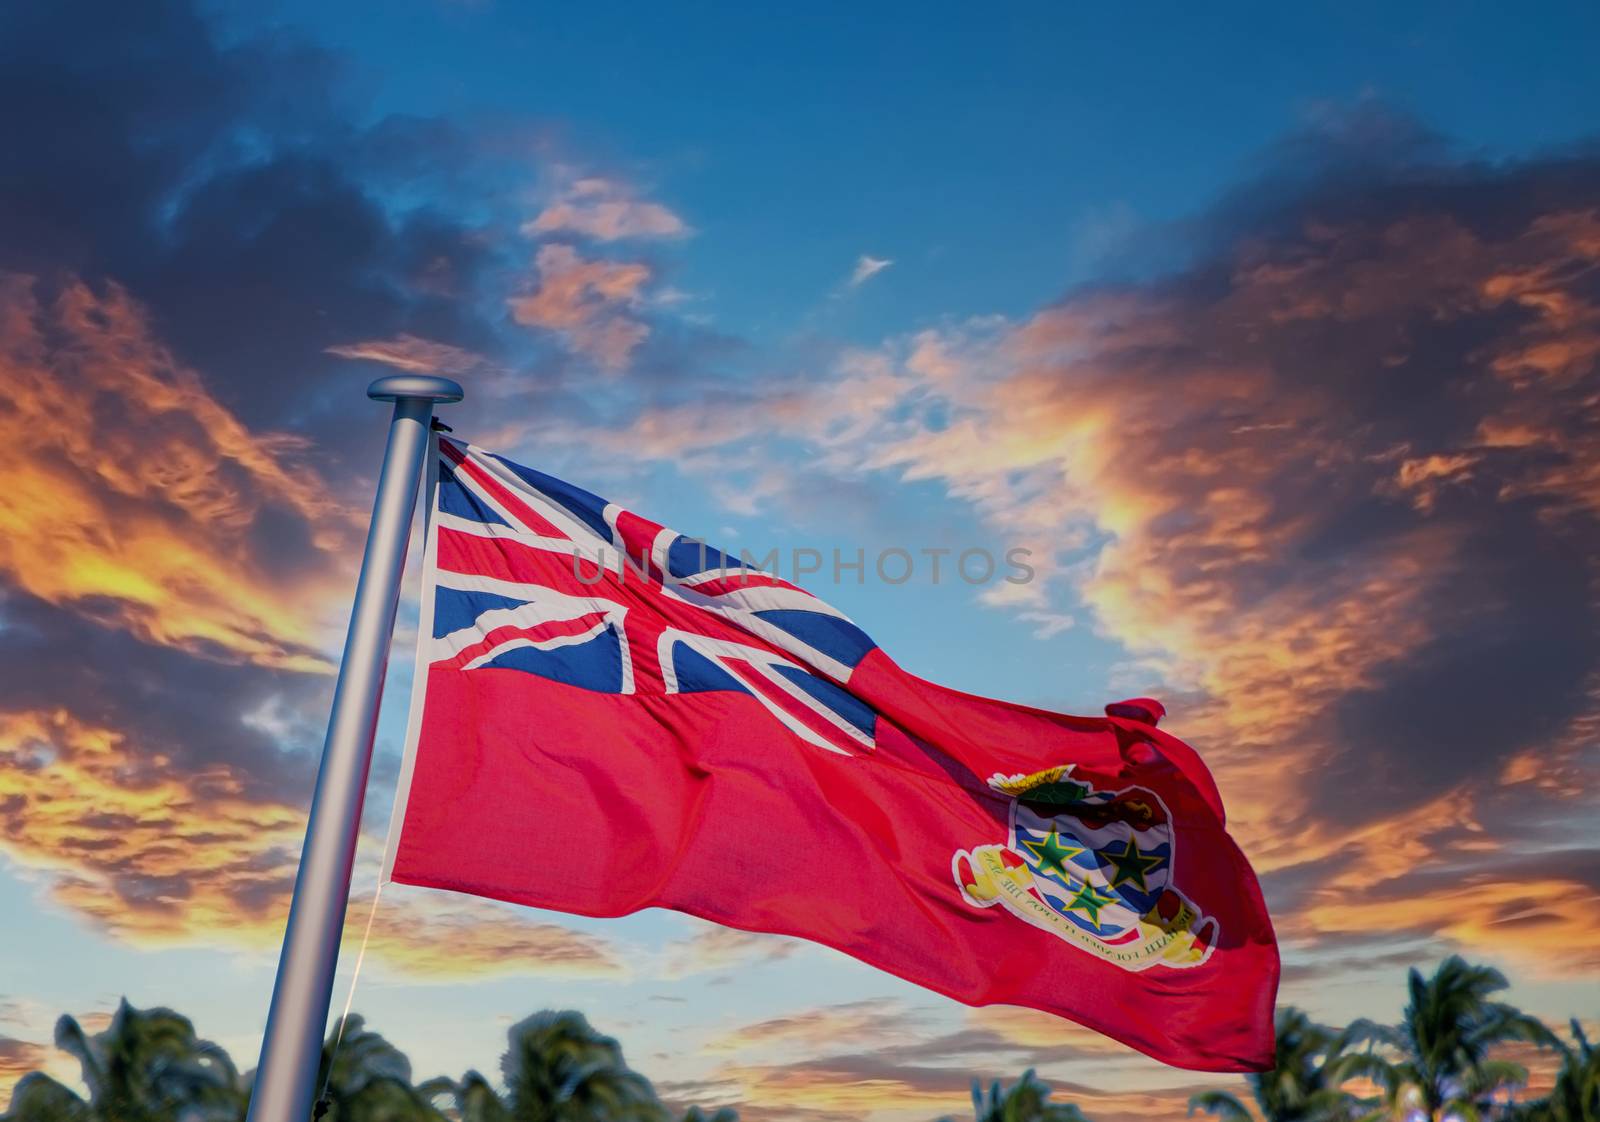 The Cayman Islands Flag flying against Blue Sky